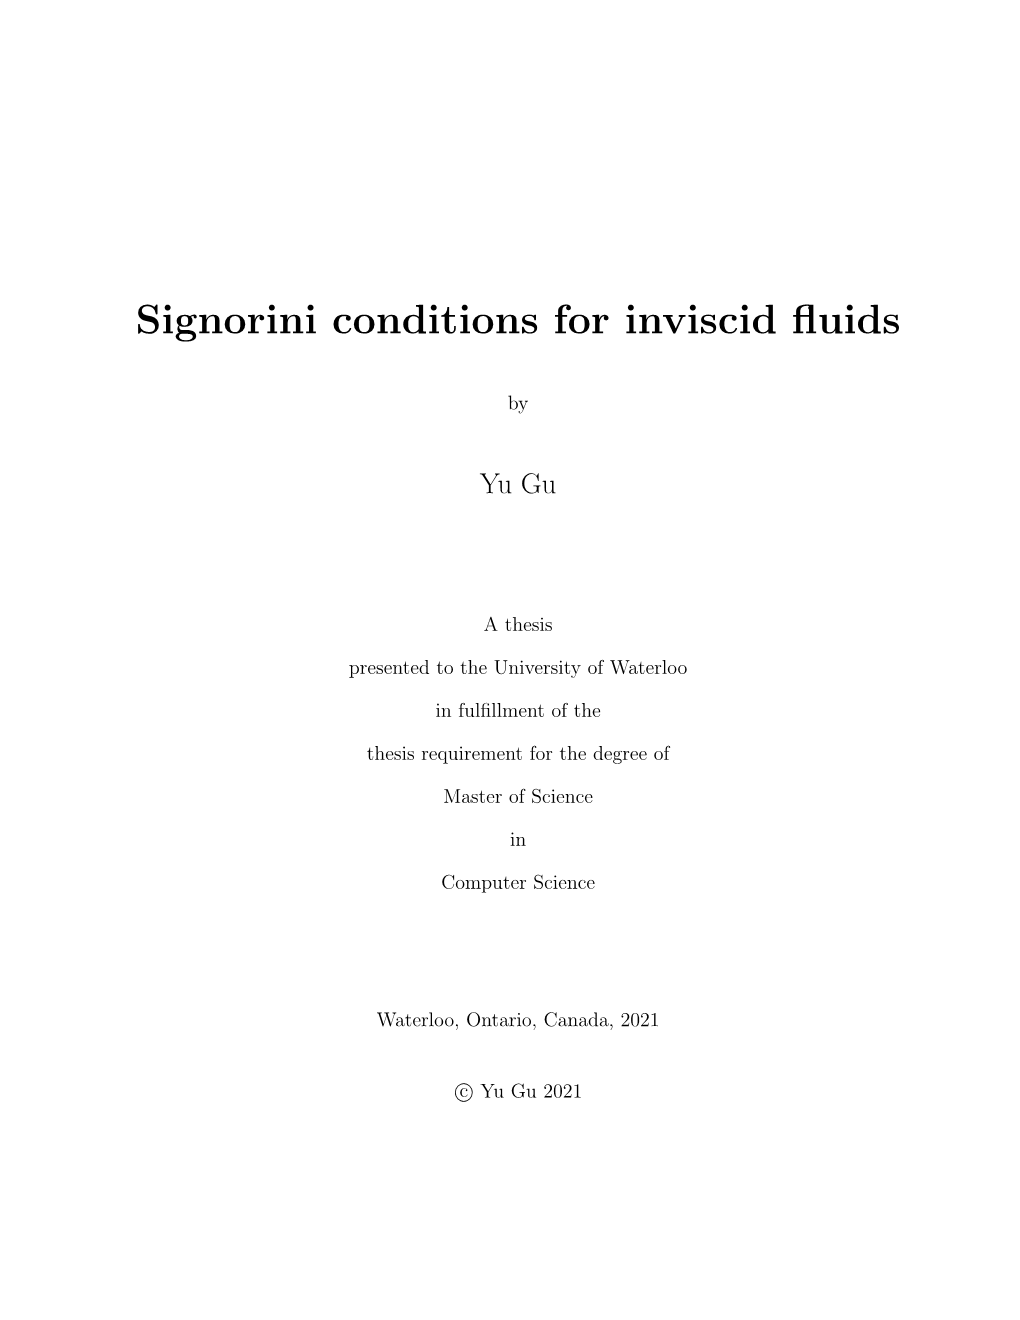 Signorini Conditions for Inviscid Fluids